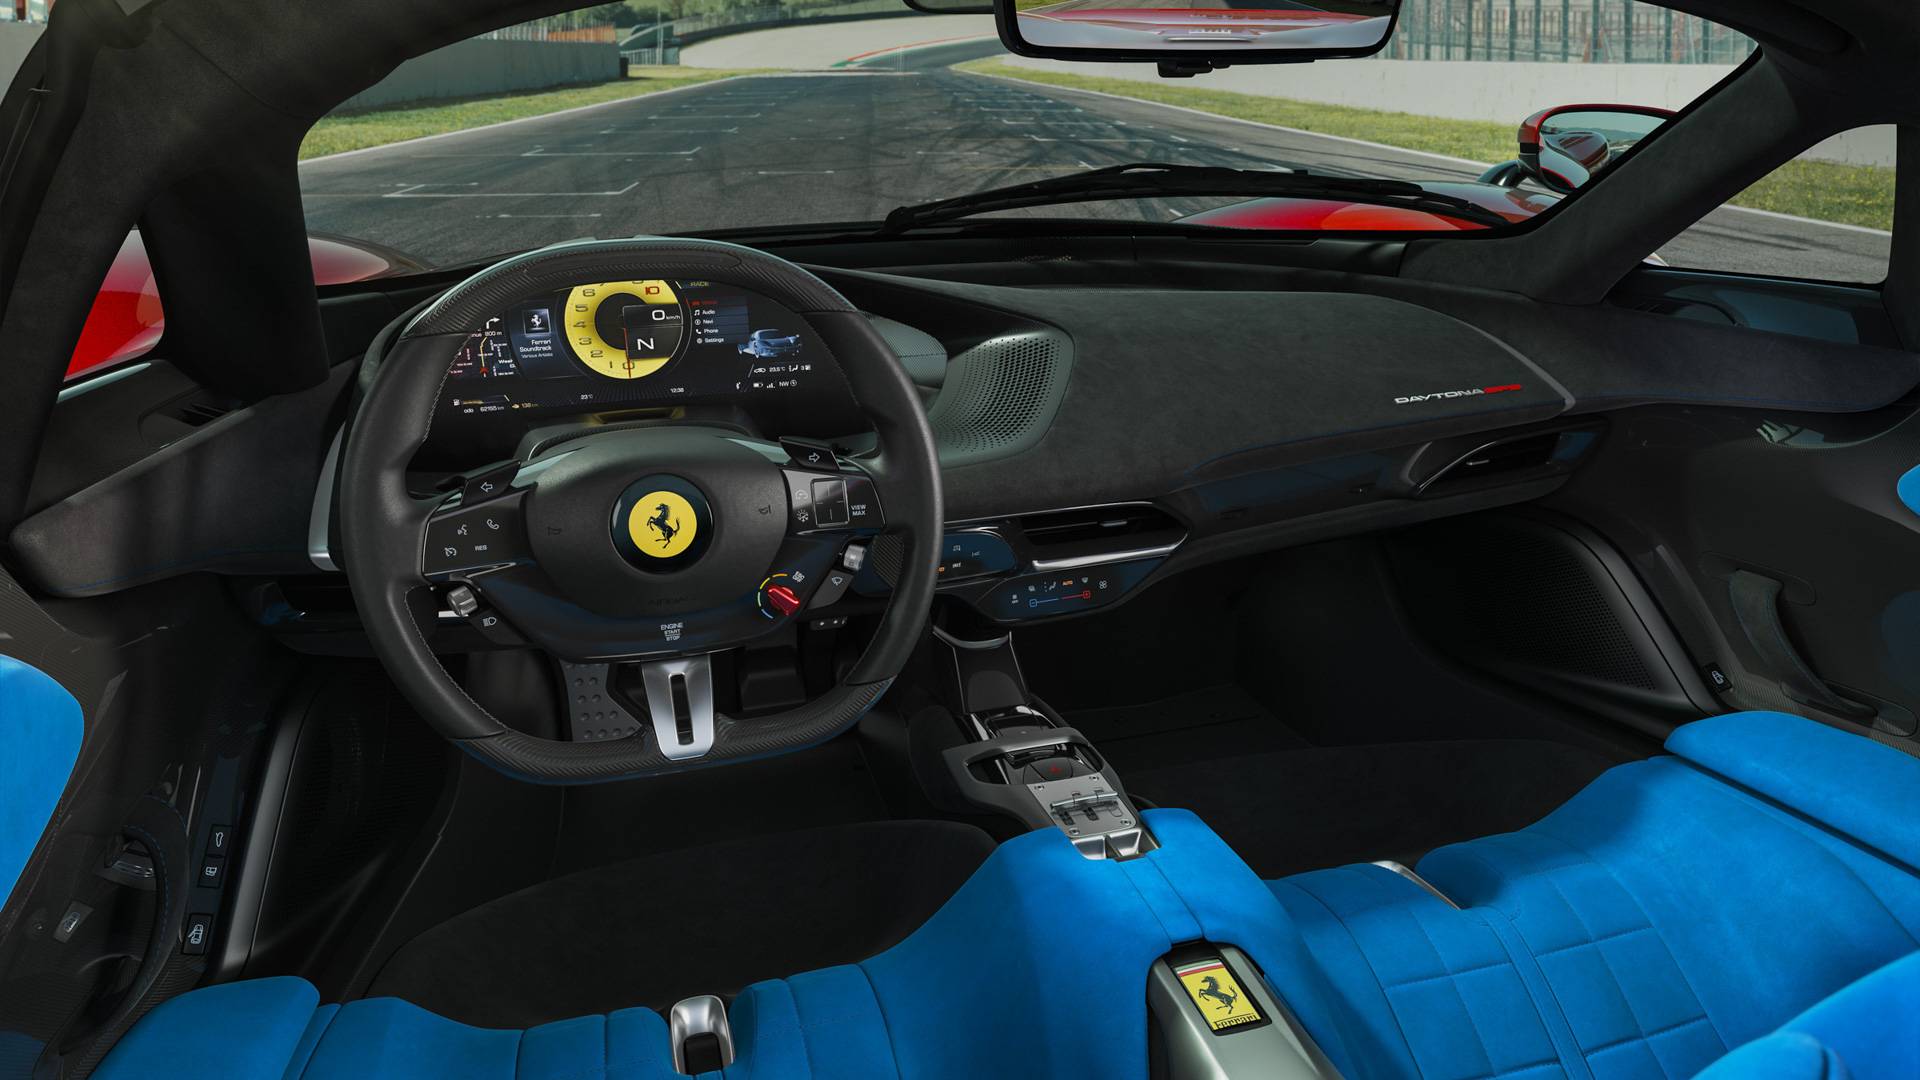 Ferrari Daytona SP3 限量599輛精選VIP限定11/20正式發表and完售...